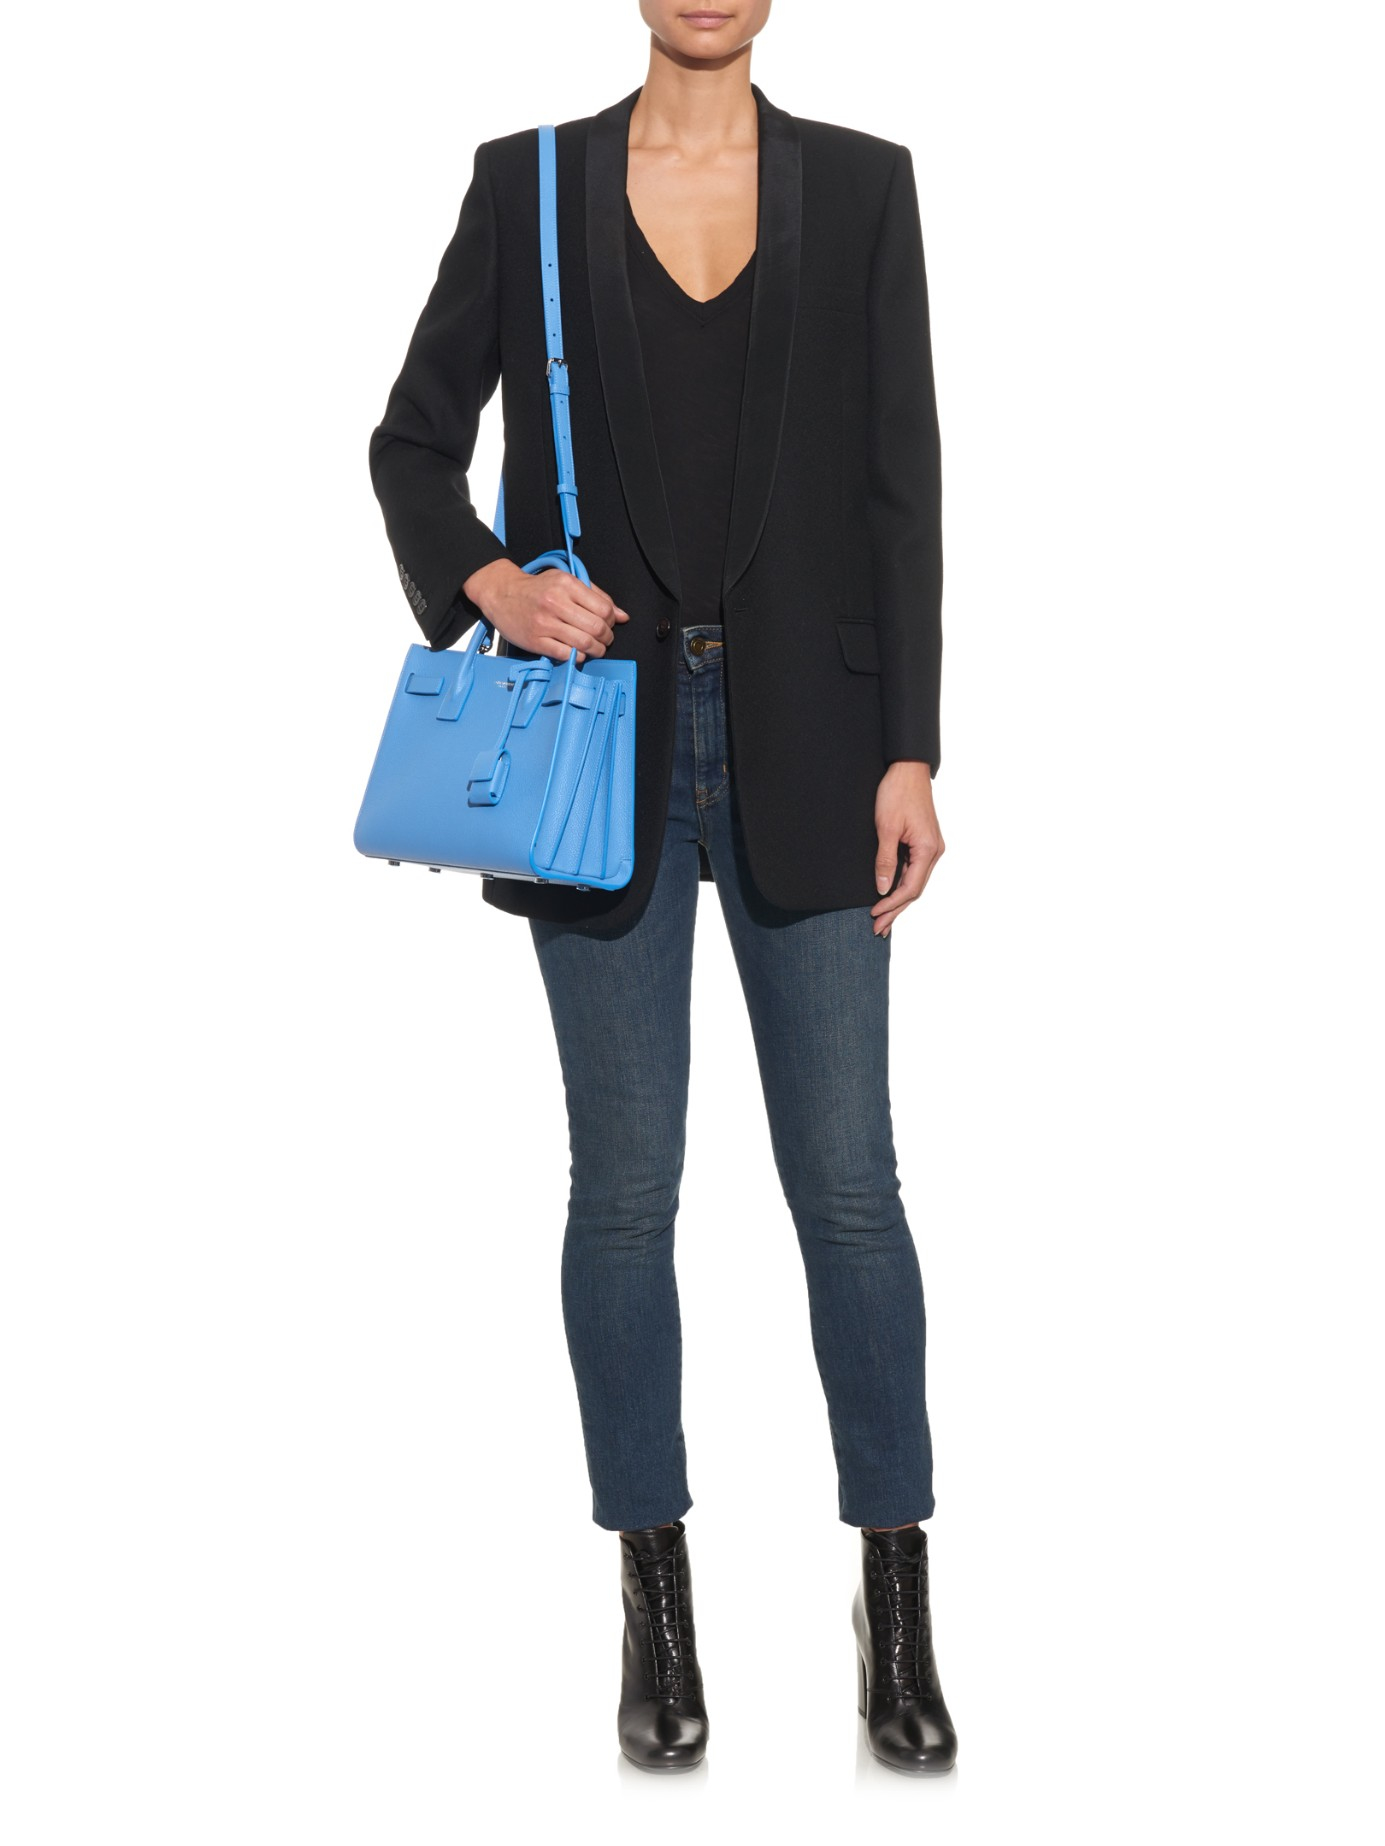 Saint Laurent 'sac De Jour Baby' Shoulder Bag in Blue